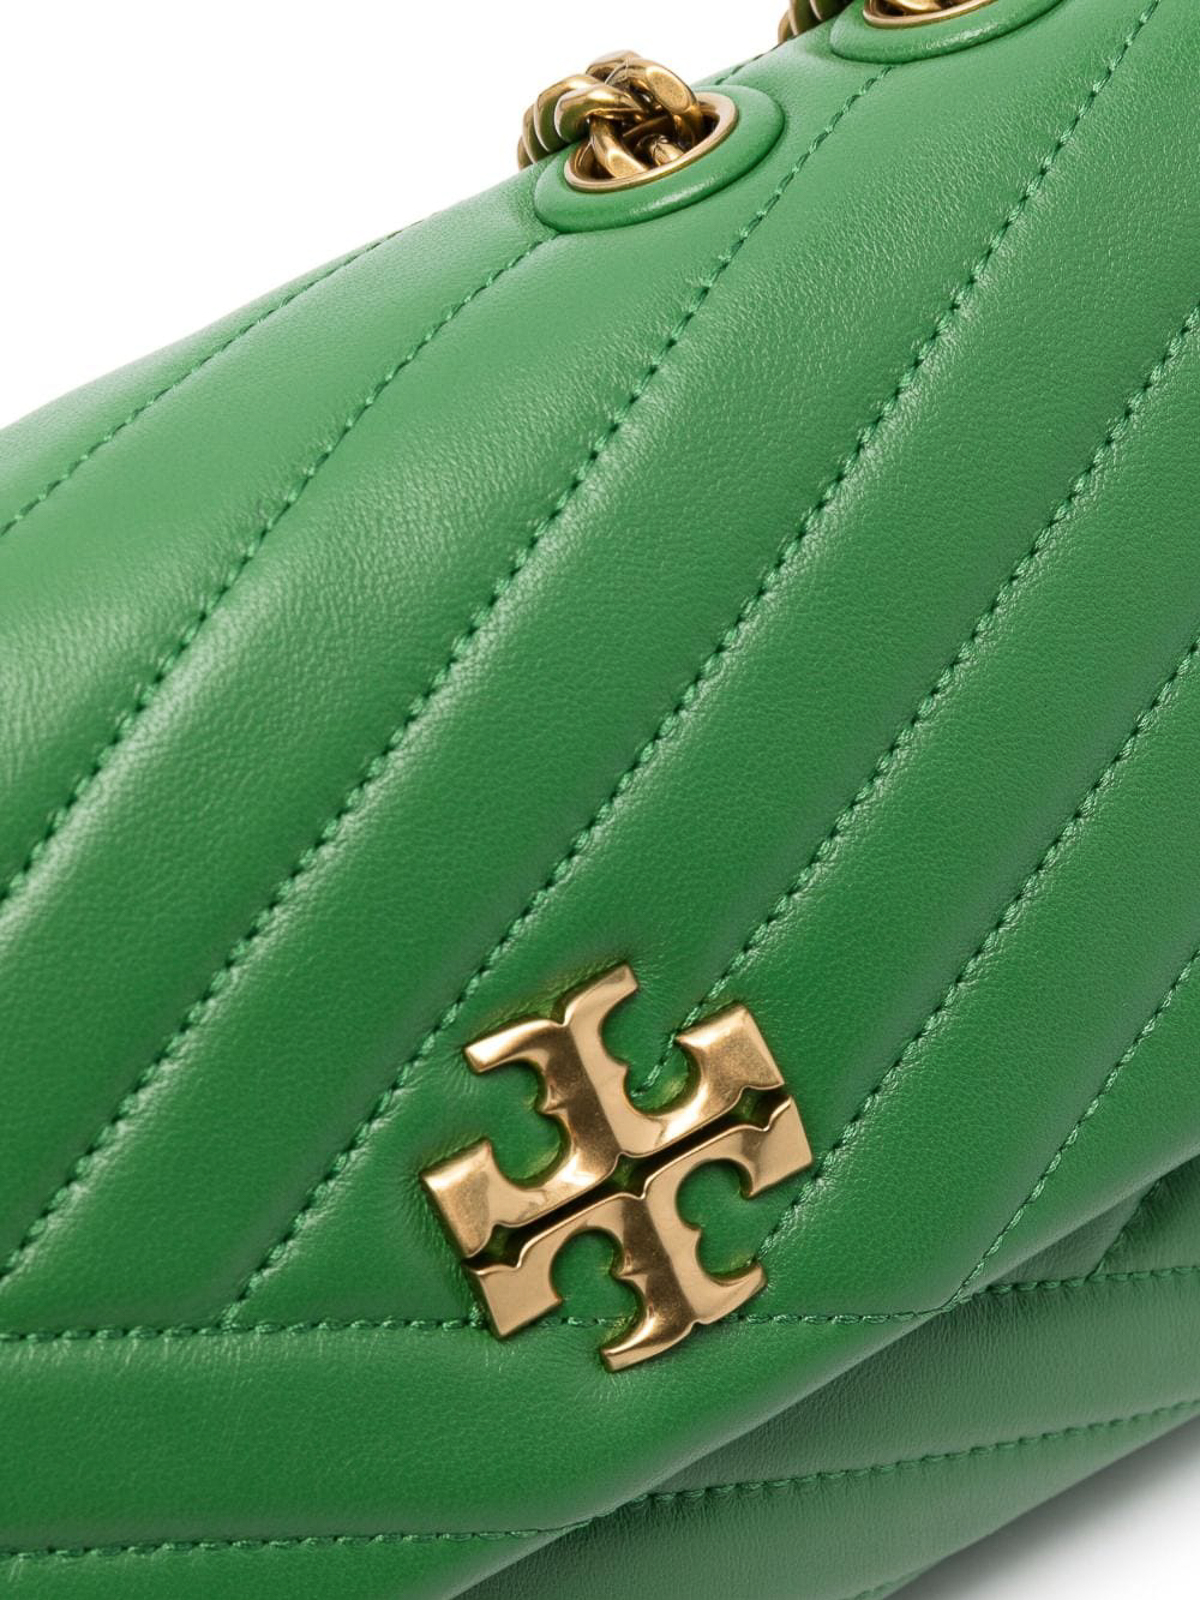 Cross body bags Tory Burch - Small kira bag in green leather - 90452301